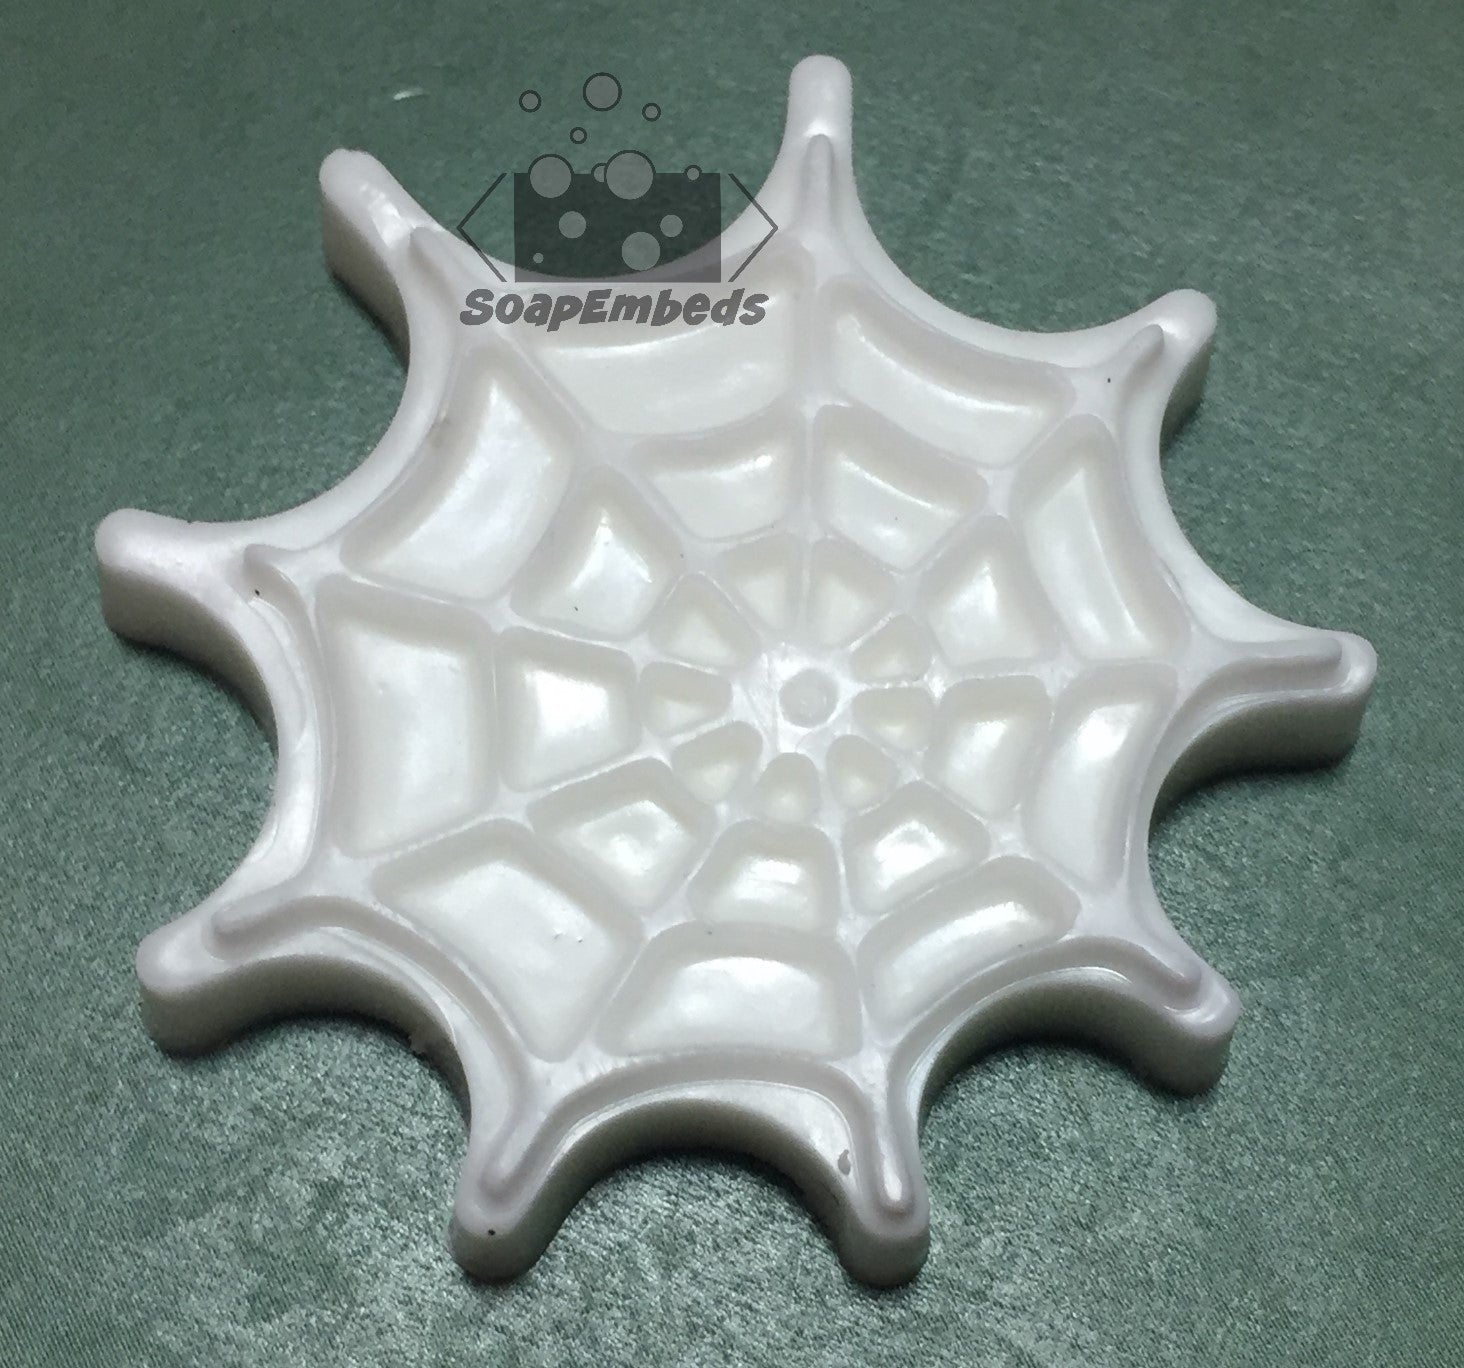 Spider Web Soap Embeds